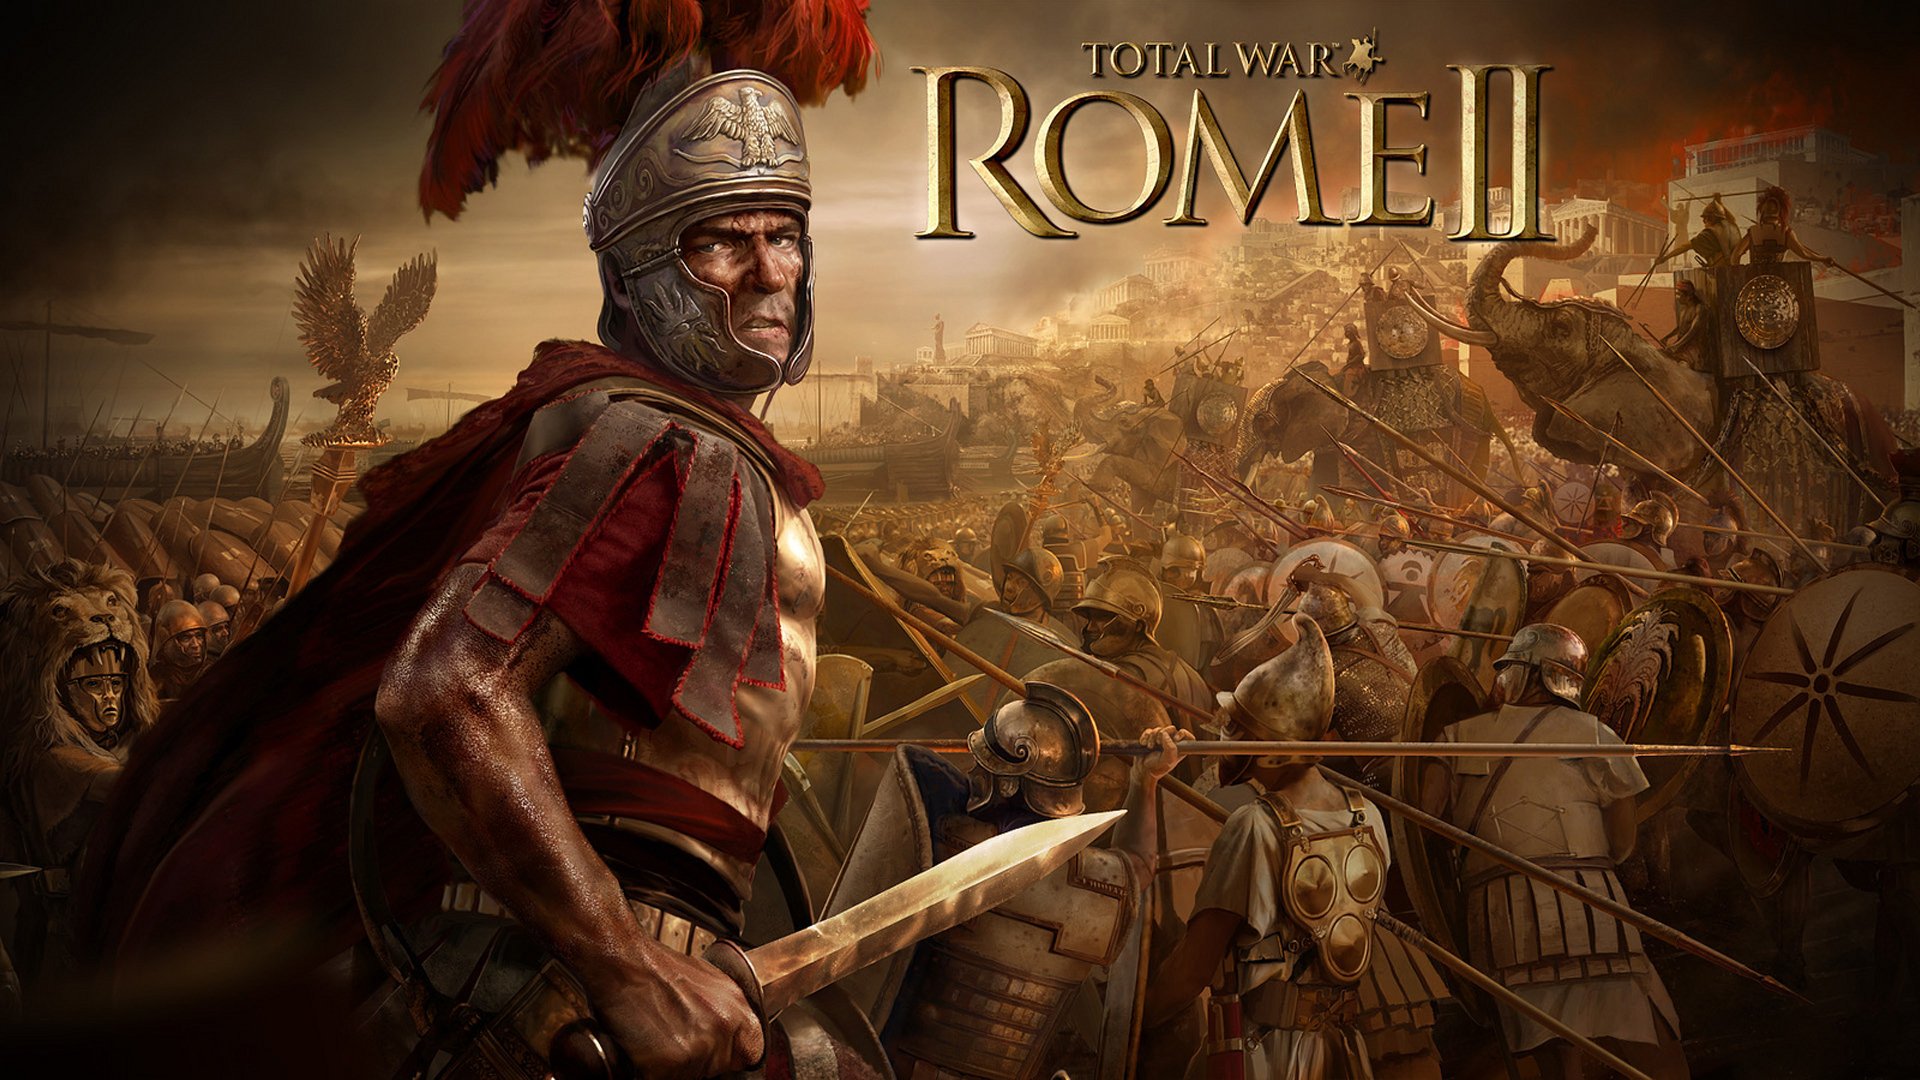 Iphone X Total War Rome 2 Wallpaper